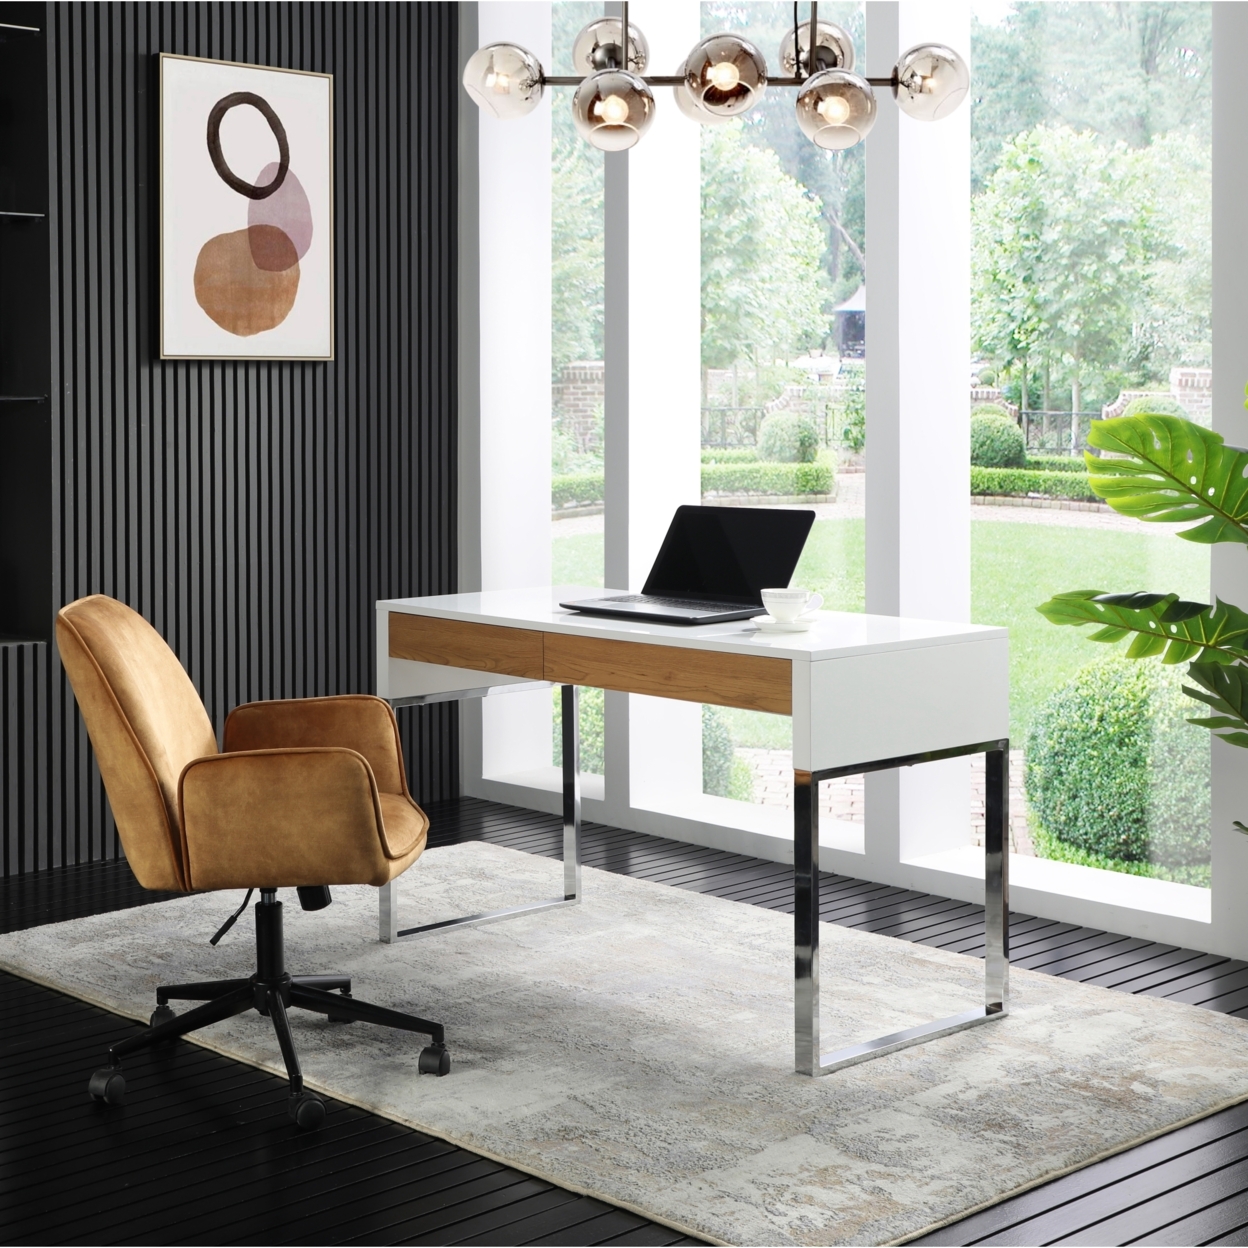 Iyla Desk-2 Storage Drawers-Geometric Frame-Open Base Design - White/silver